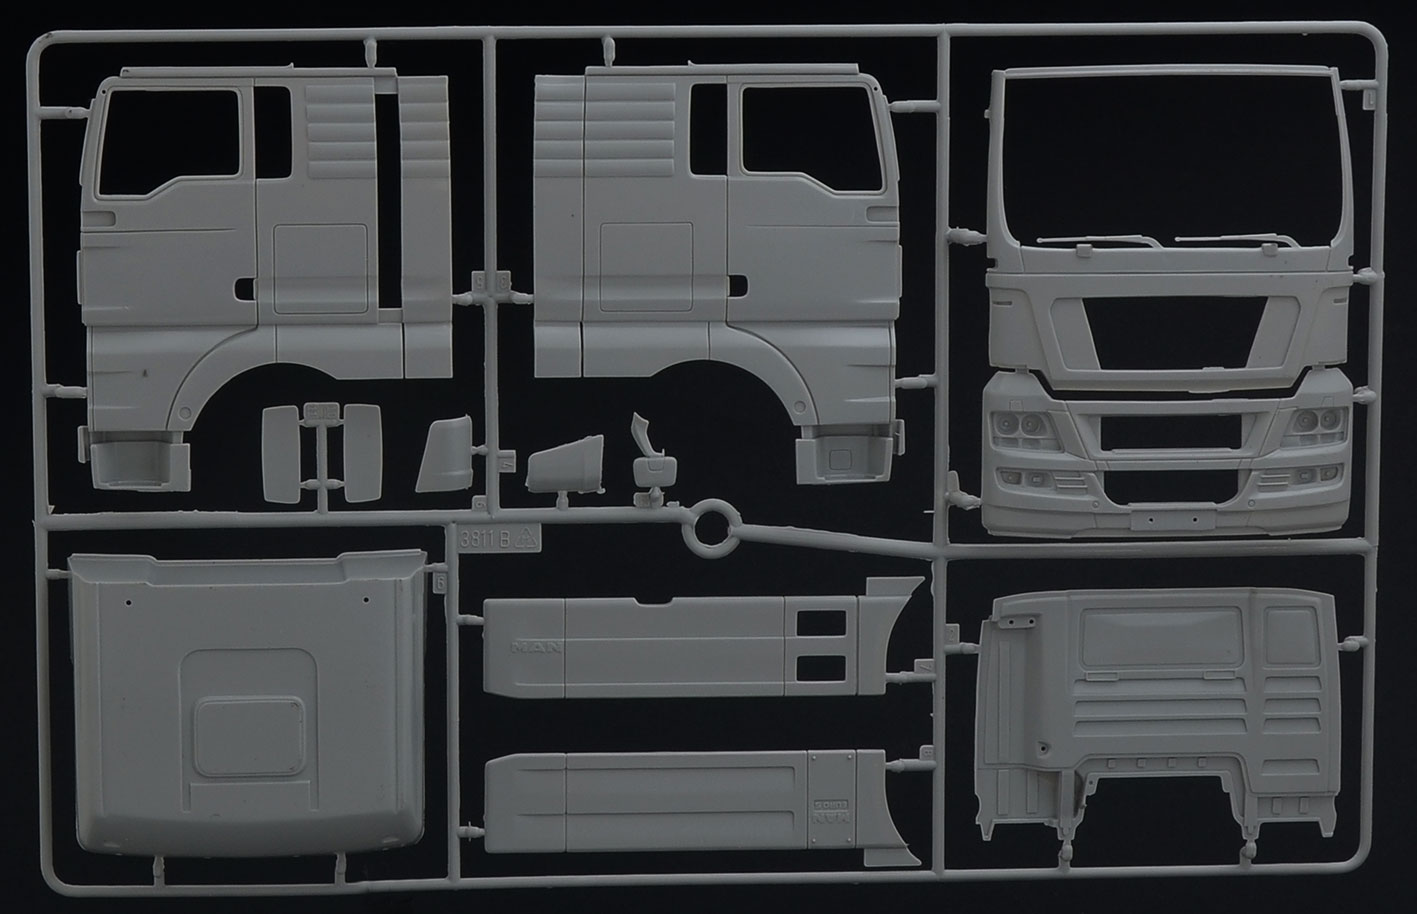 Cabine de camion MAN TGX XXL - I3877 - Italeri - Camions - Easy Miniatures